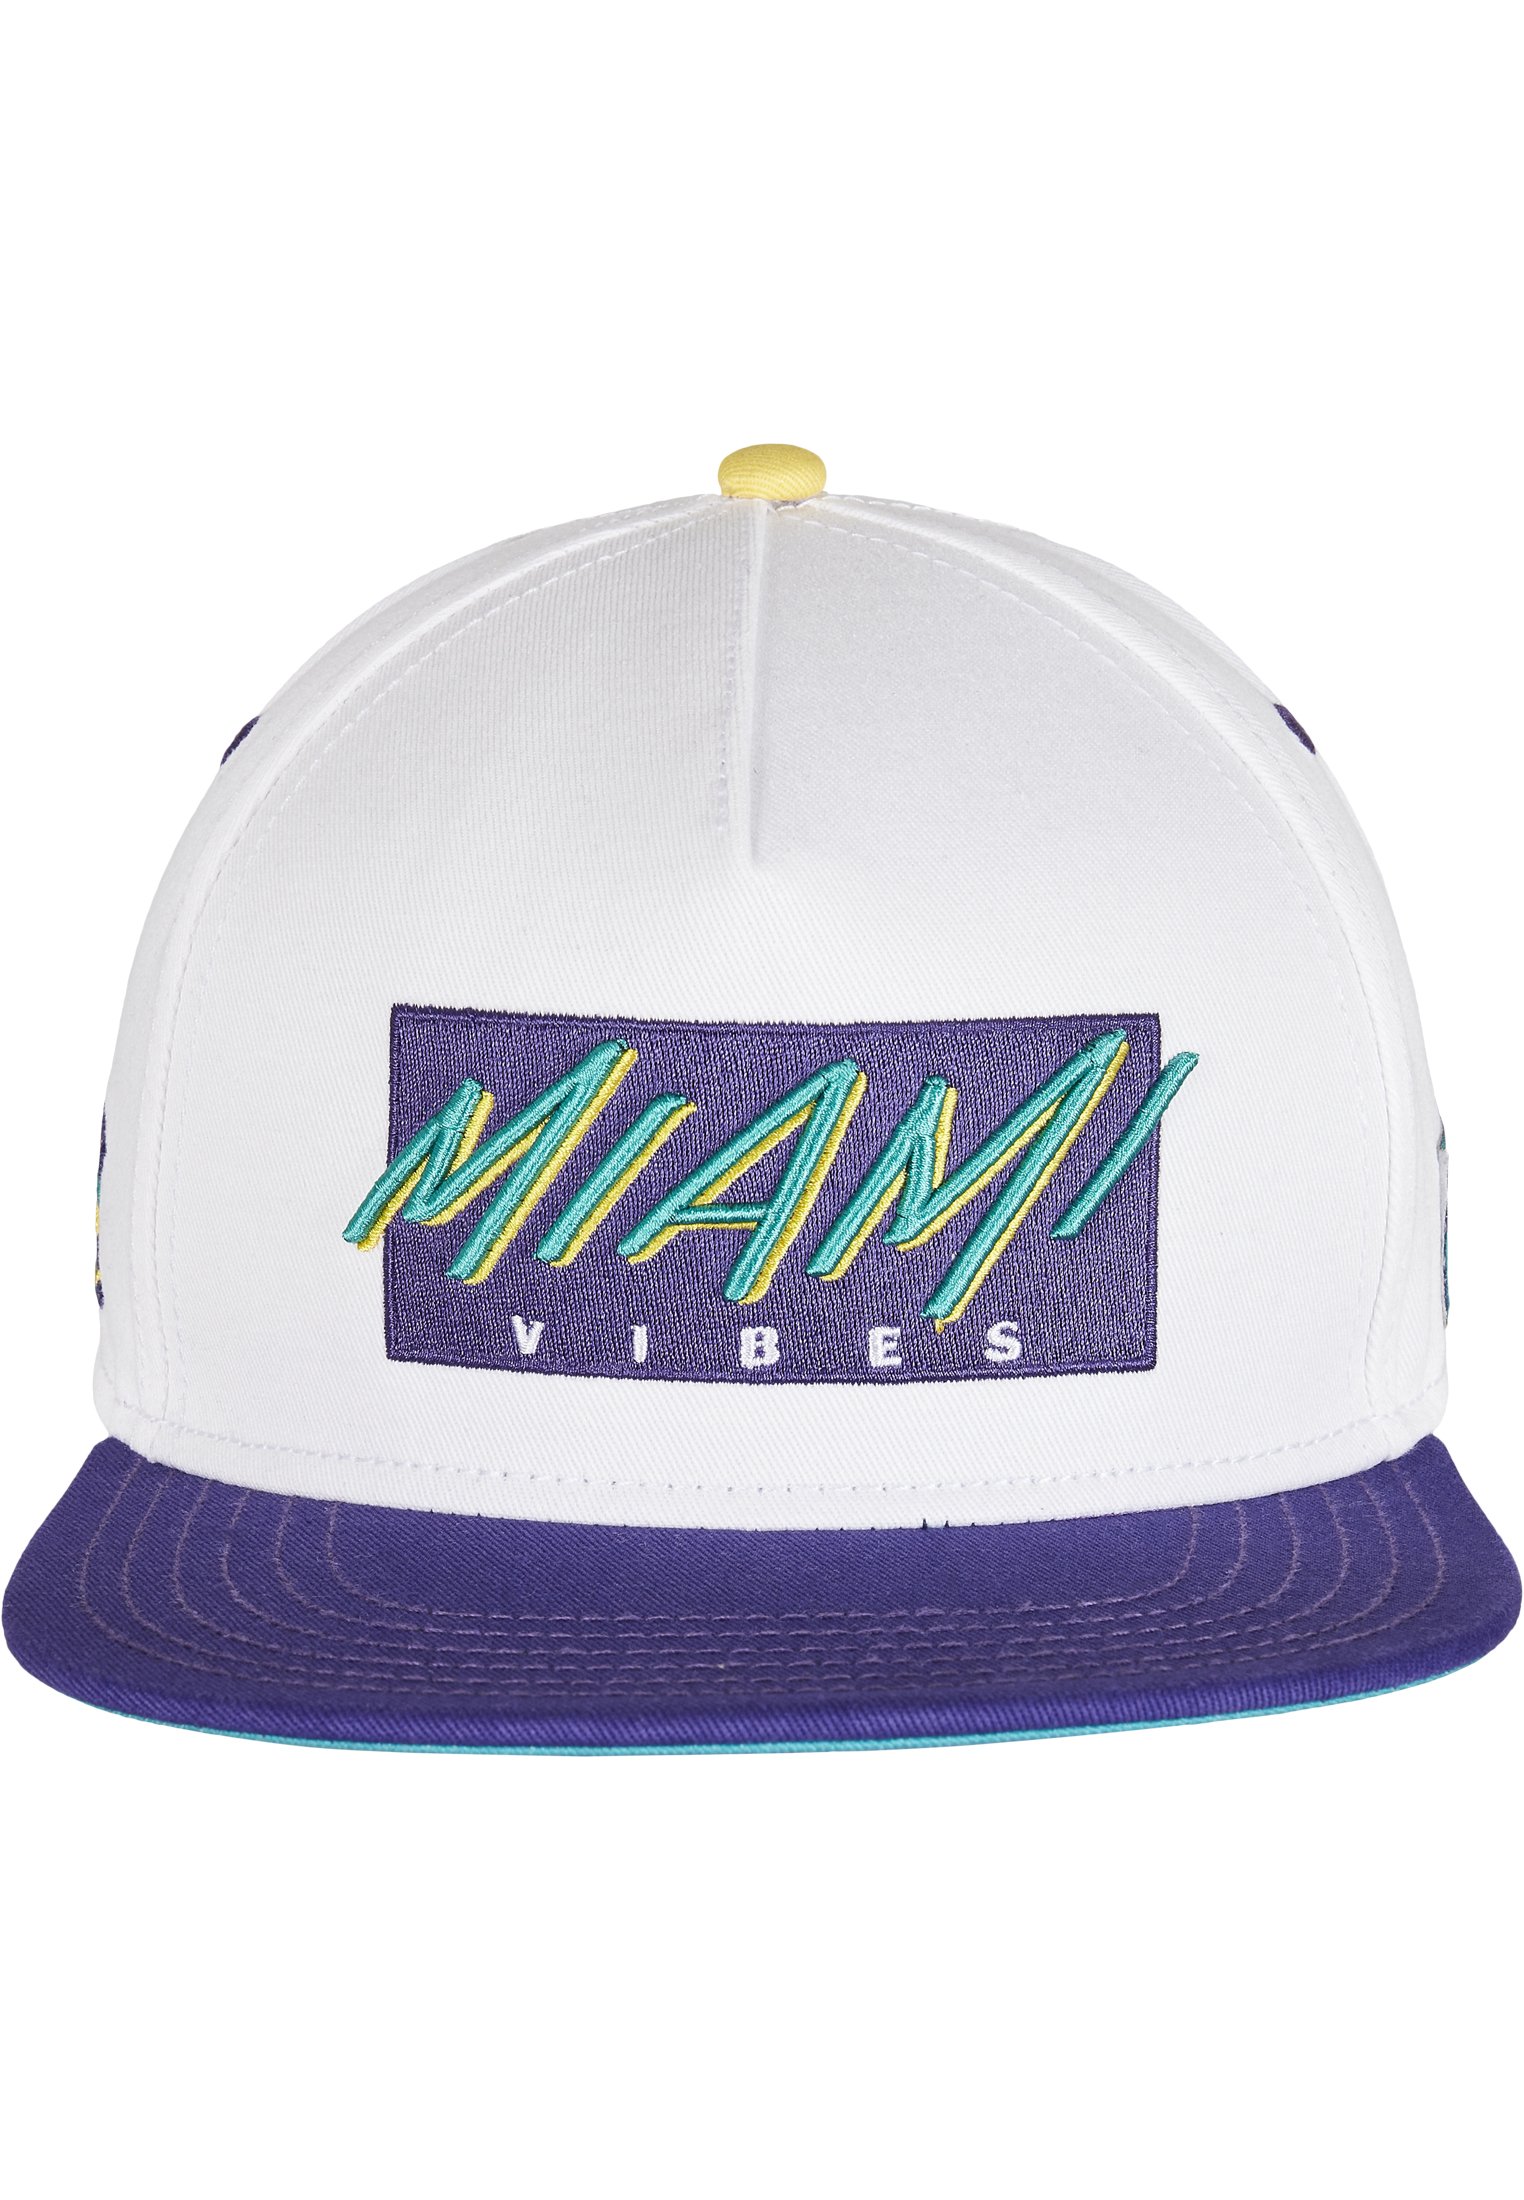 C&S WL Miami Vibes Snapback white/mc one size